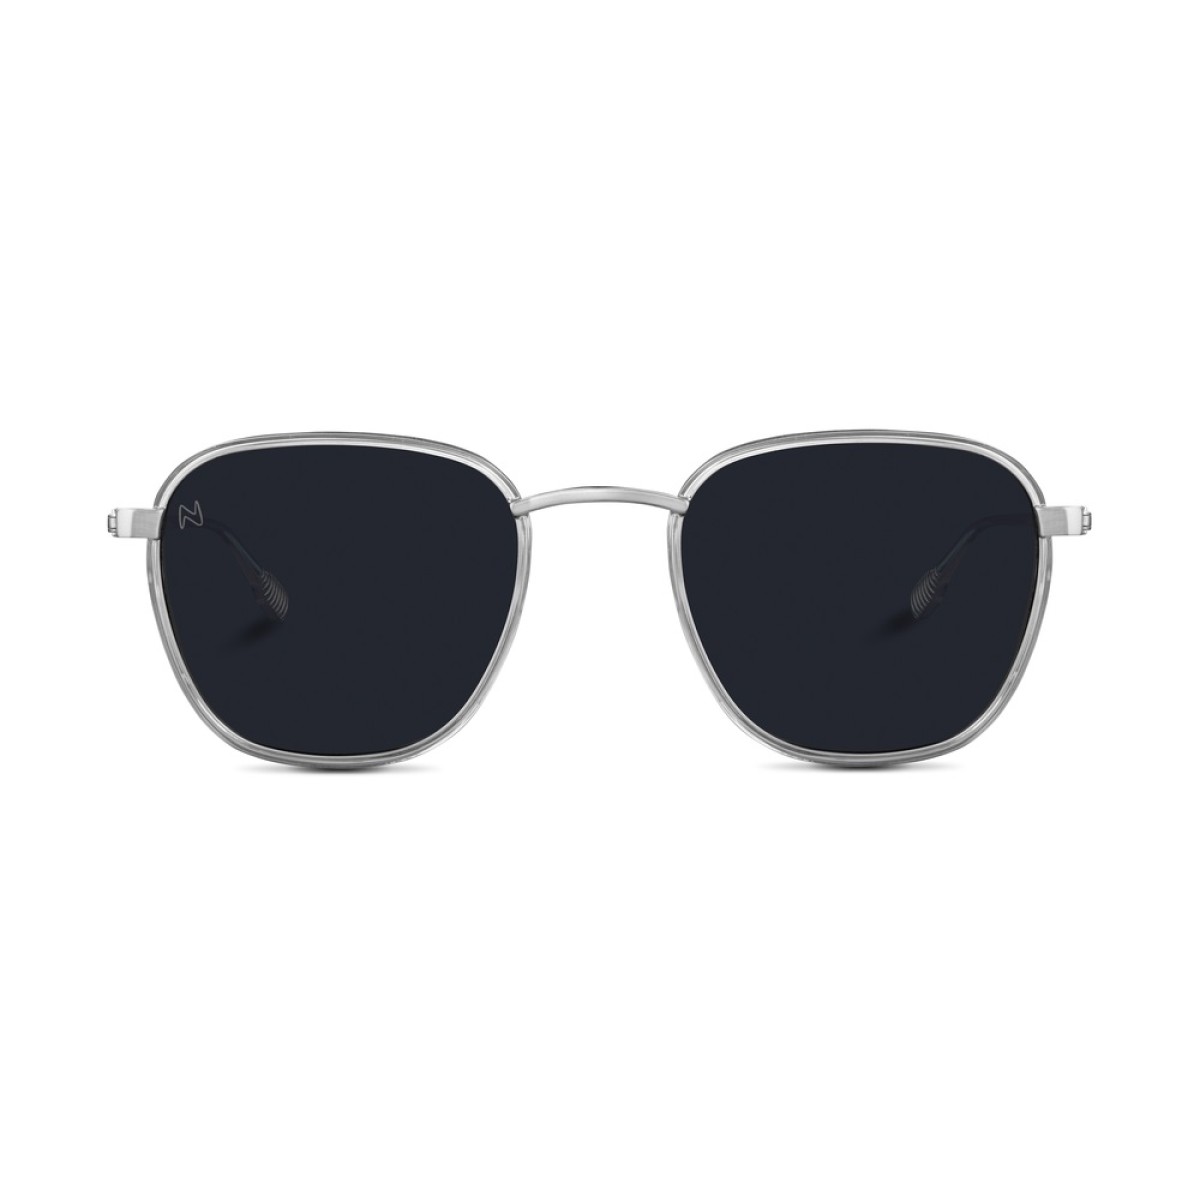 Nooz - Dual Sunglasses - Hiro - Crystal